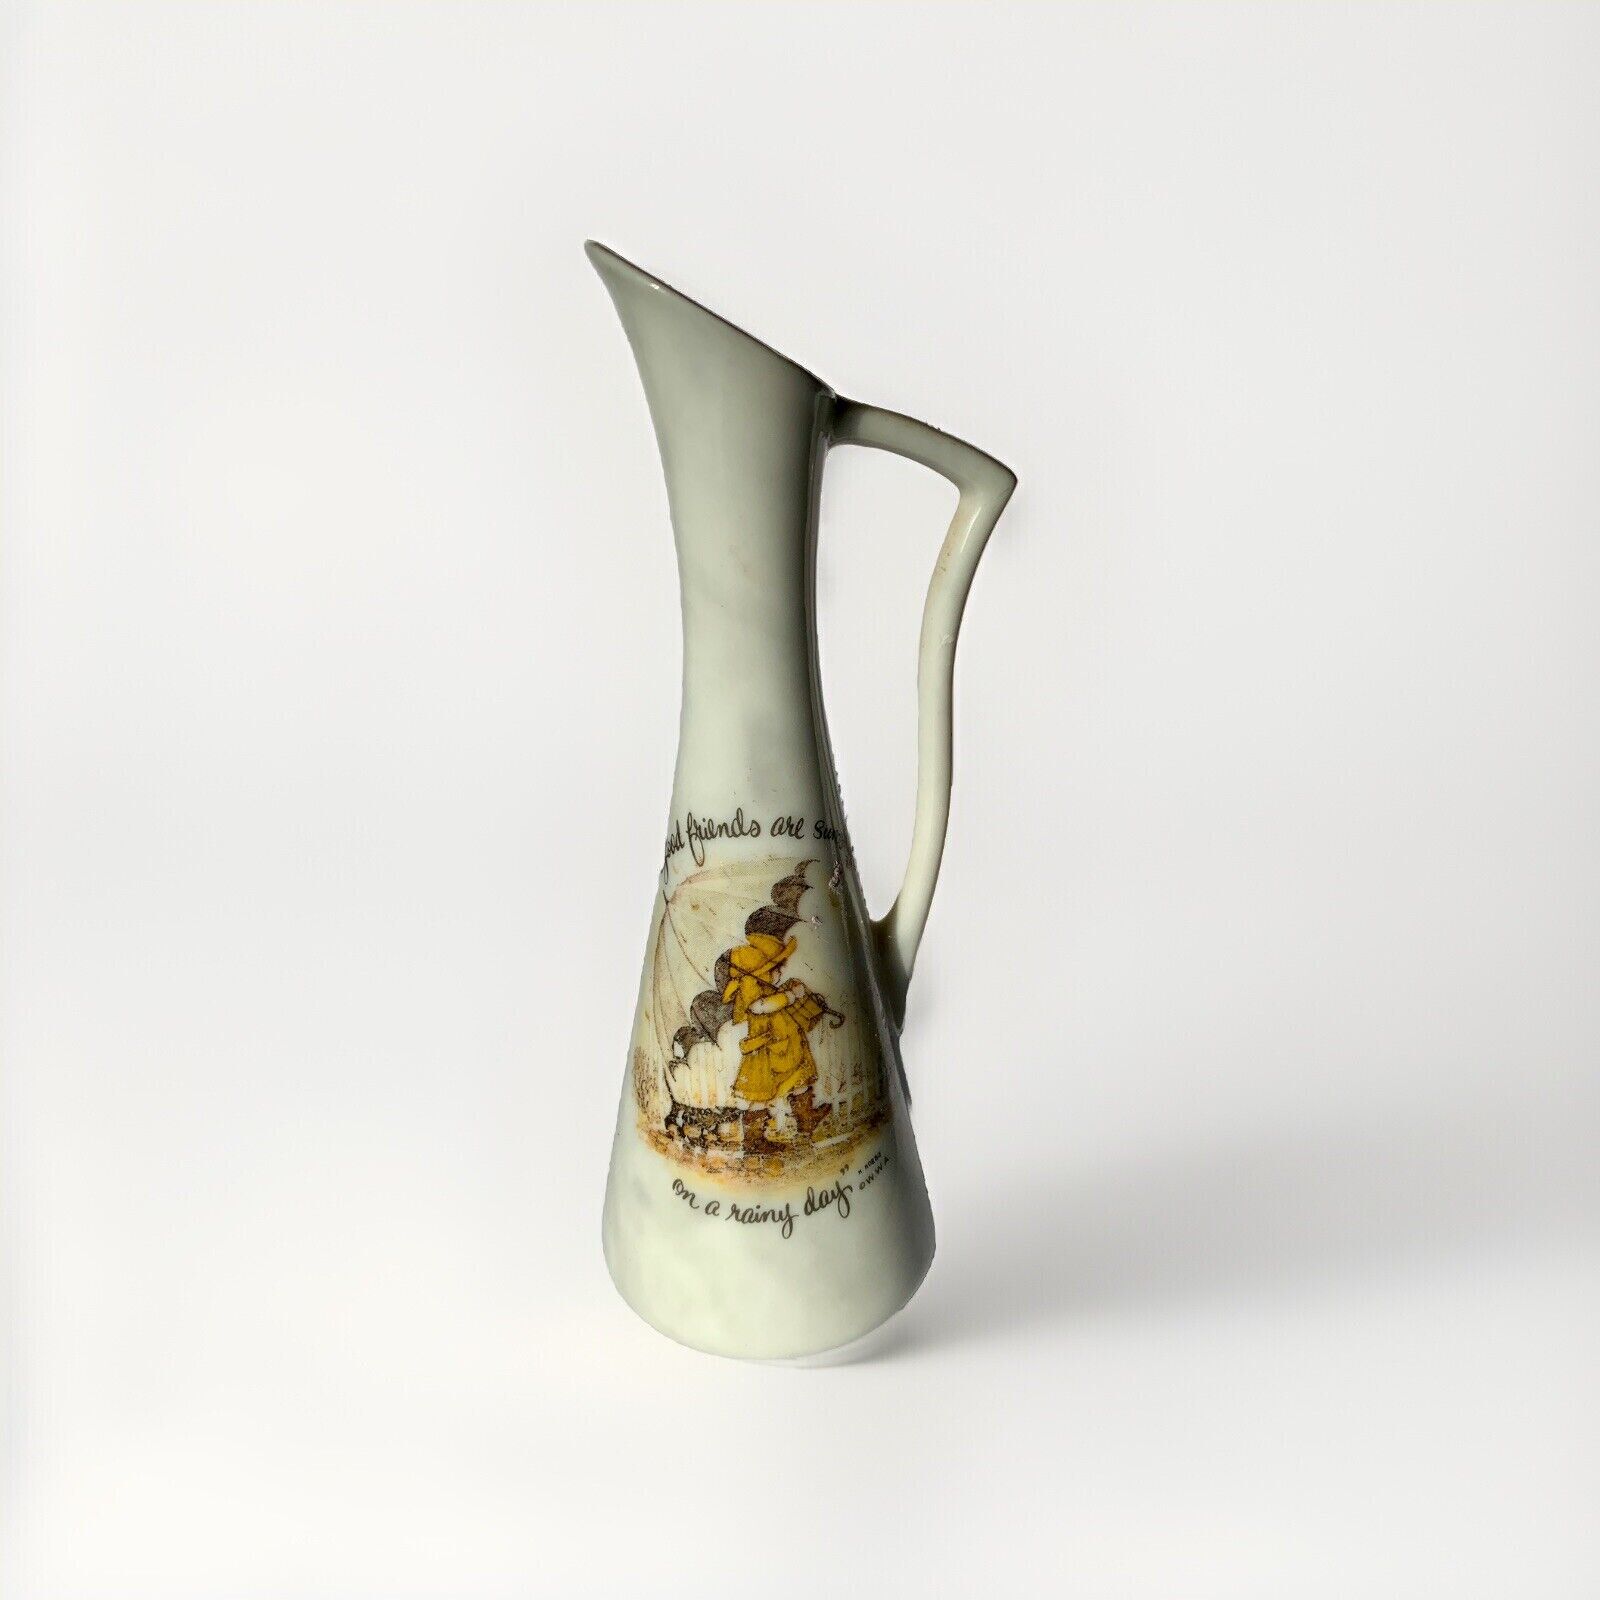 Vintage 1973 Holly Hobbie “Good Friends” Mini Porcelain Pitcher Bud Vase WWA©️